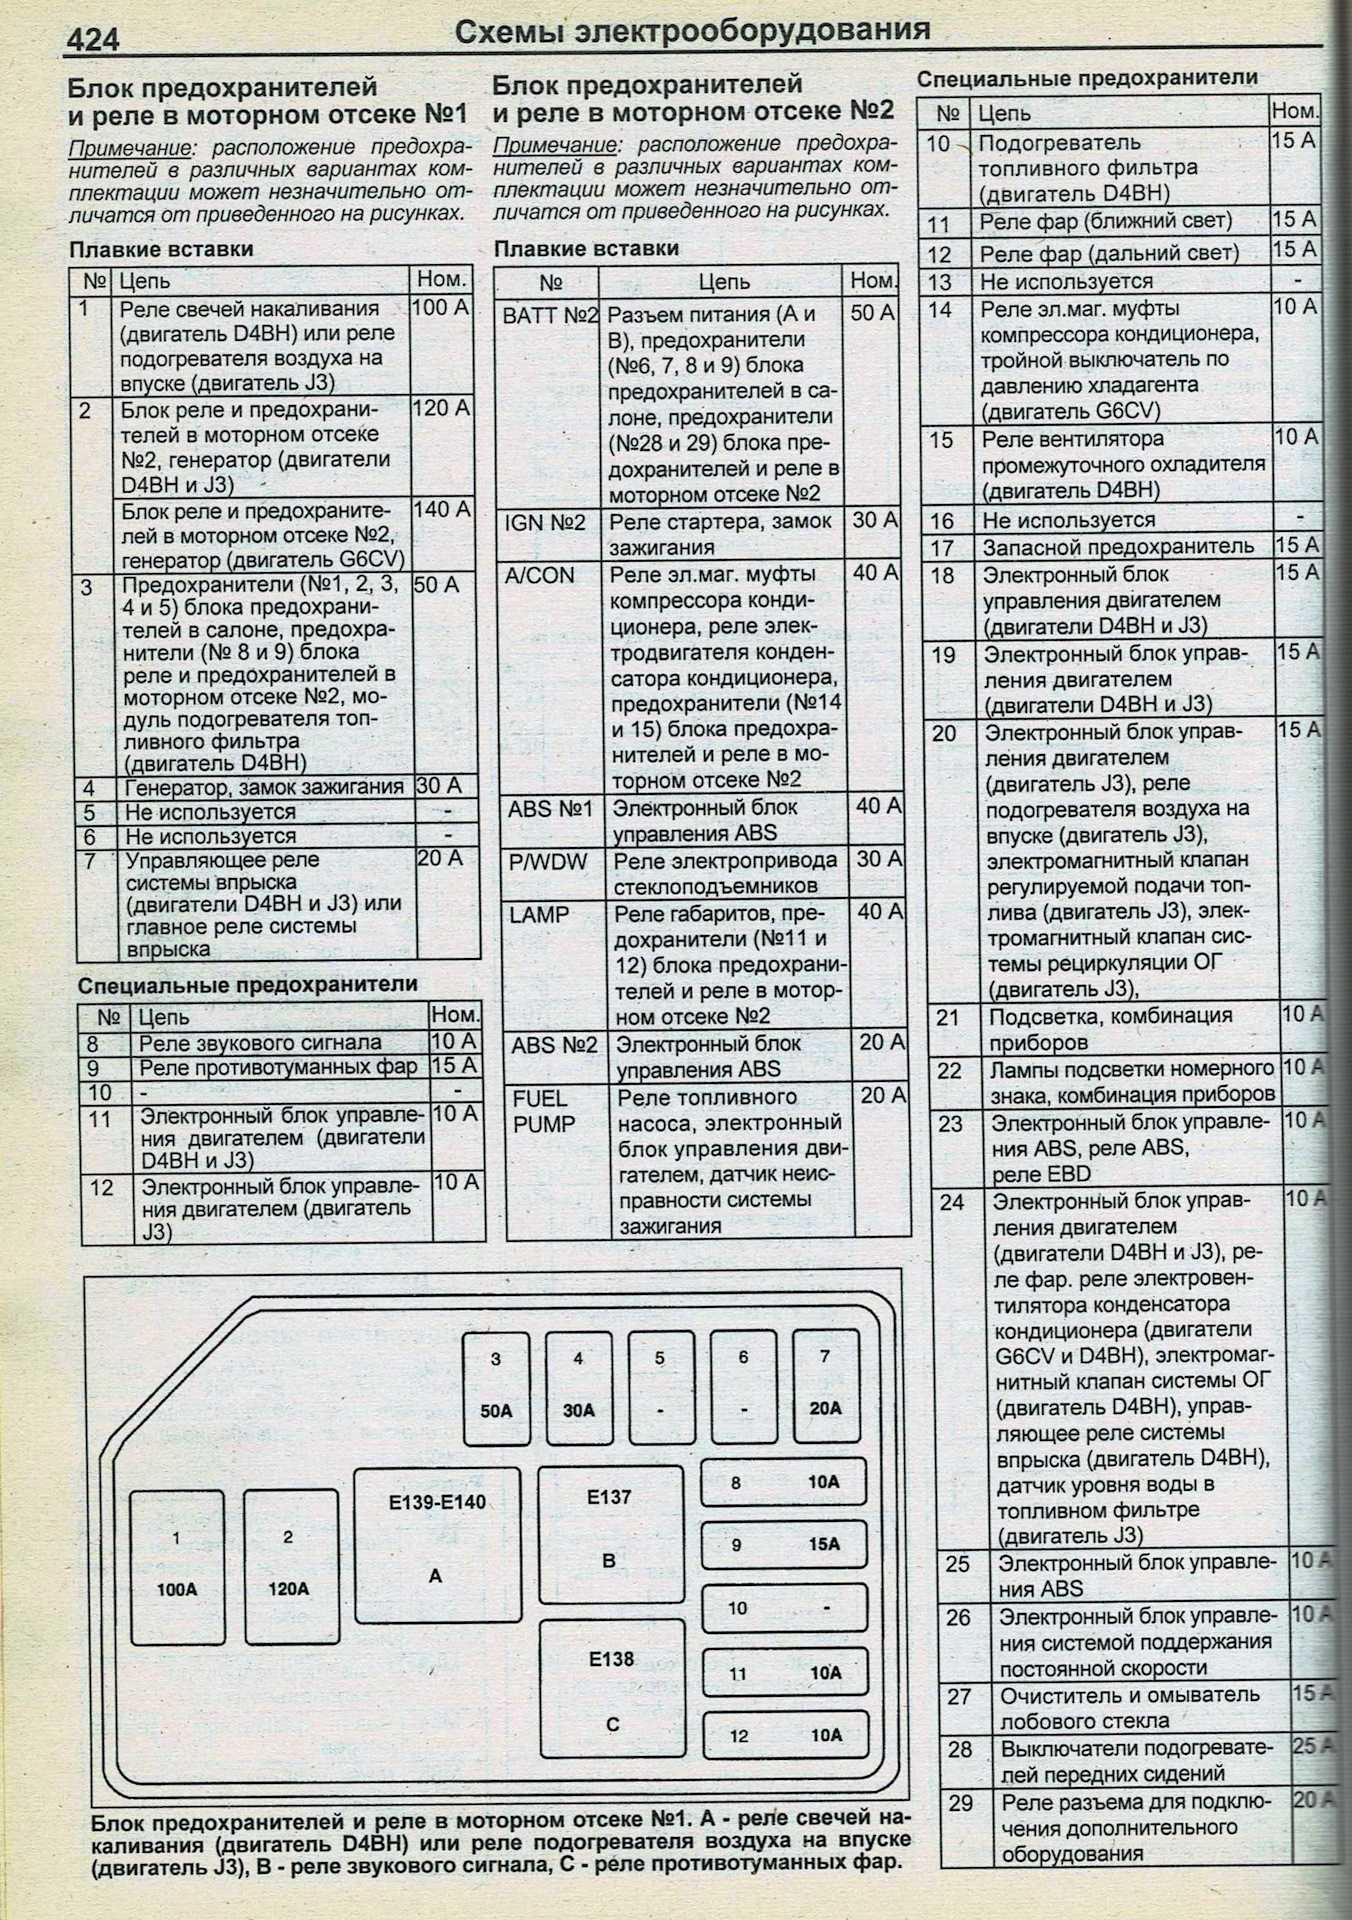 Предохранители mitsubishi pajero 4 и реле со схемами блоков и описанием назначения